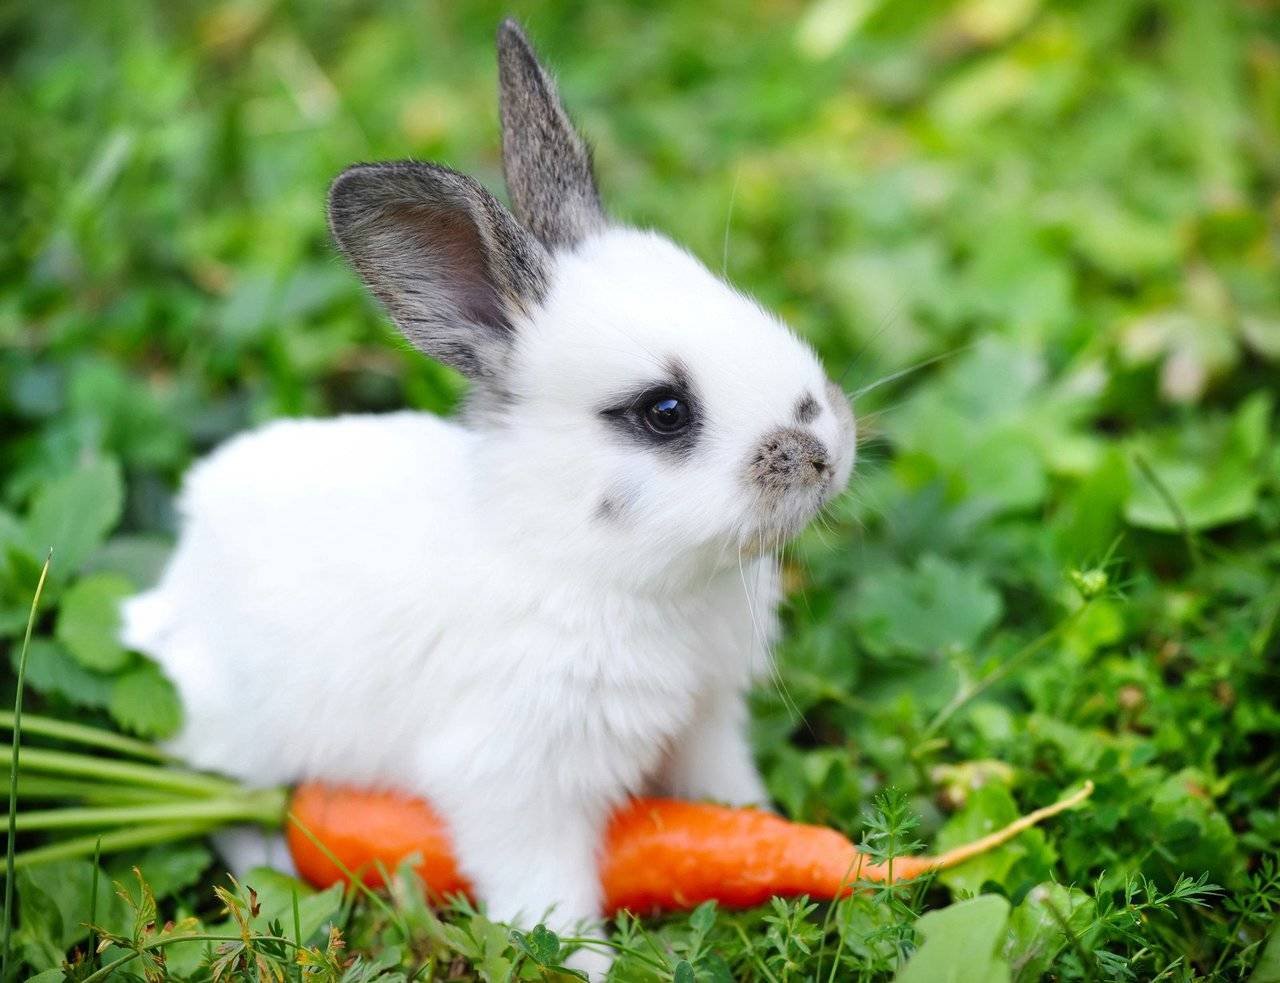 Diet of rabbits